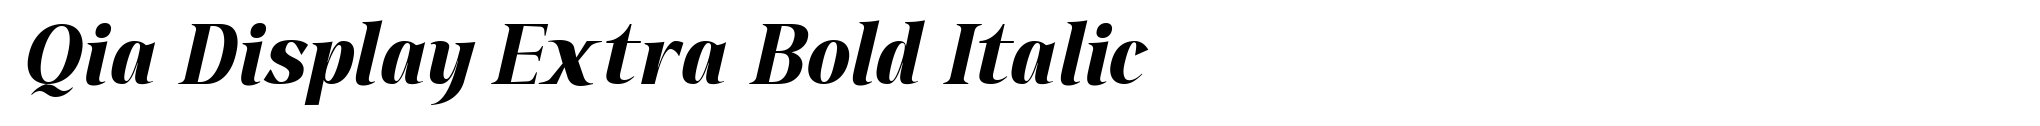 Qia Display Extra Bold Italic image